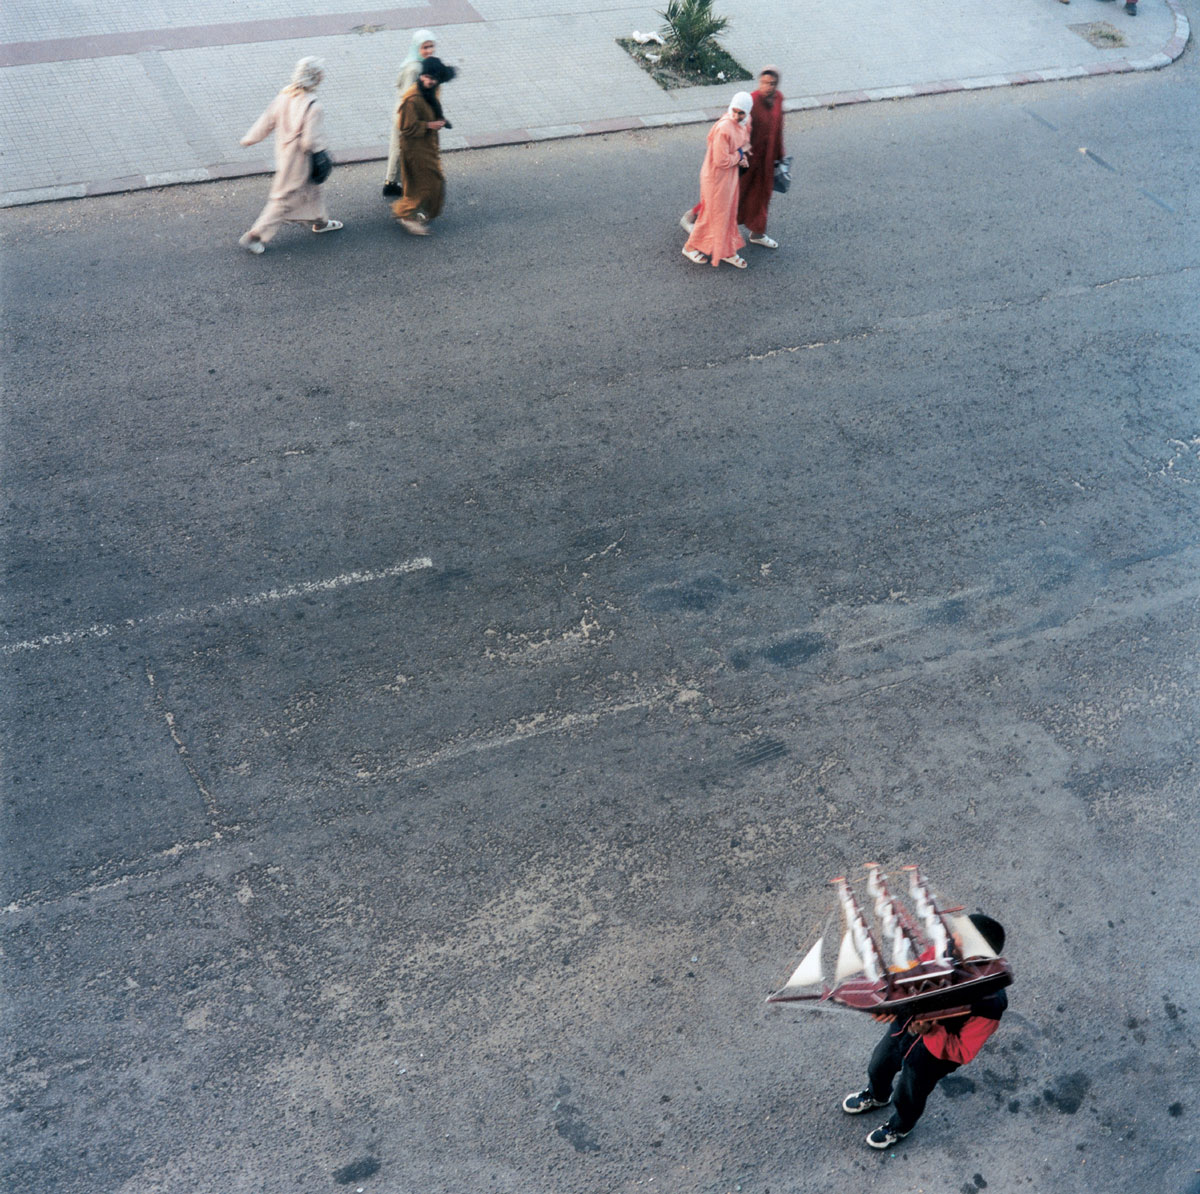 Artist Yto Barrada's 2000 photograph of figures walking through Tangier's Boulevard Playa, titled 